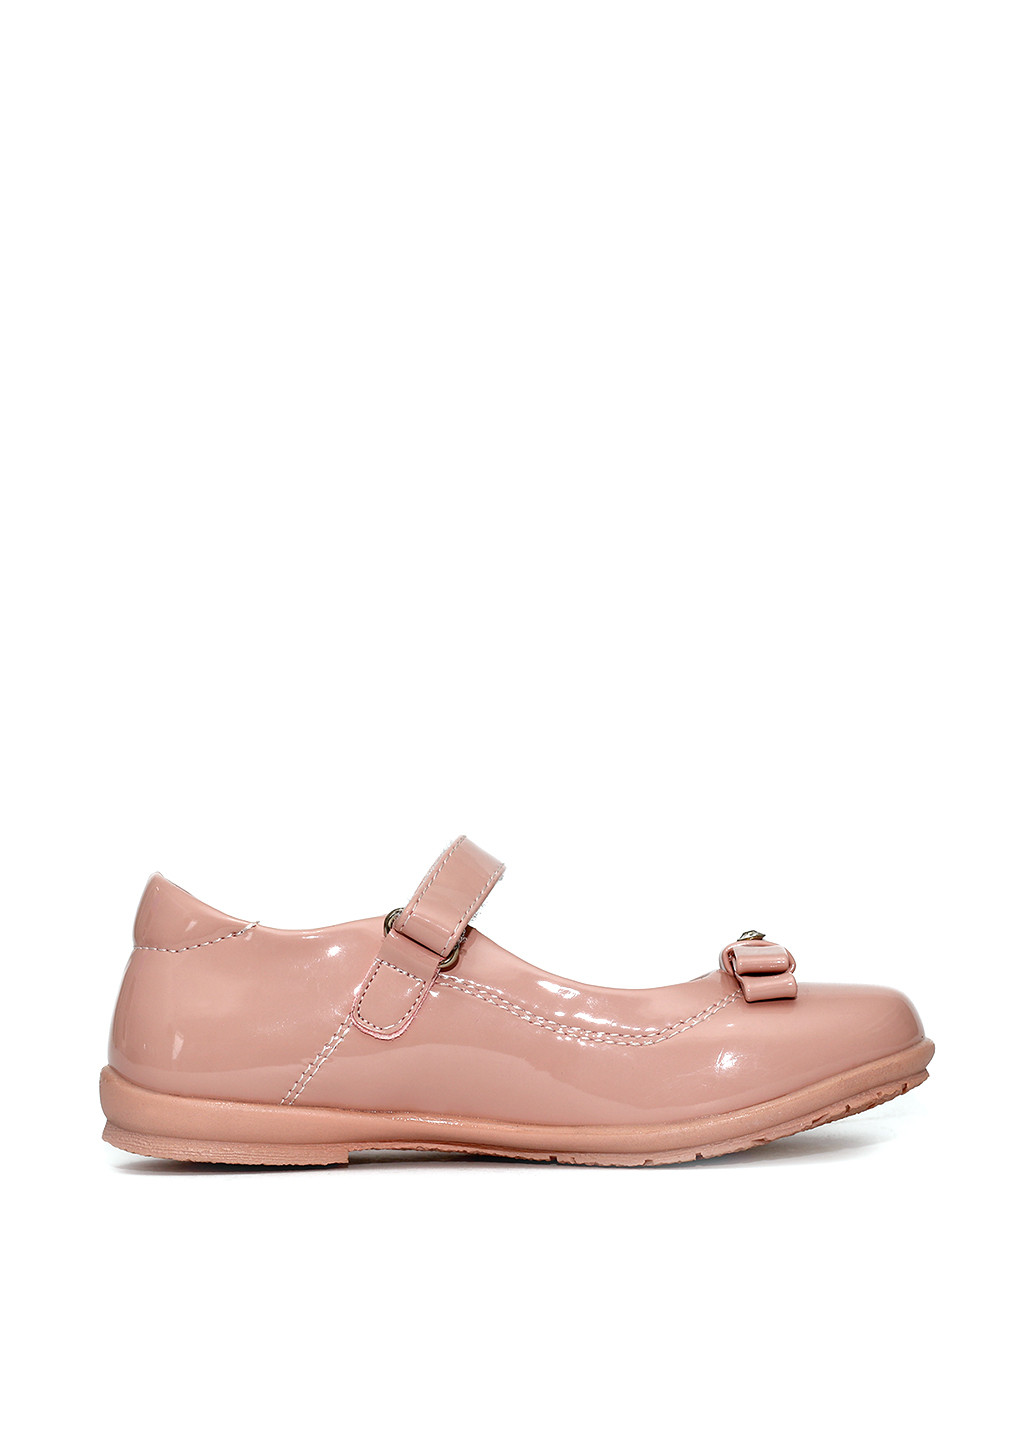 Розовые туфли без каблука Clibee